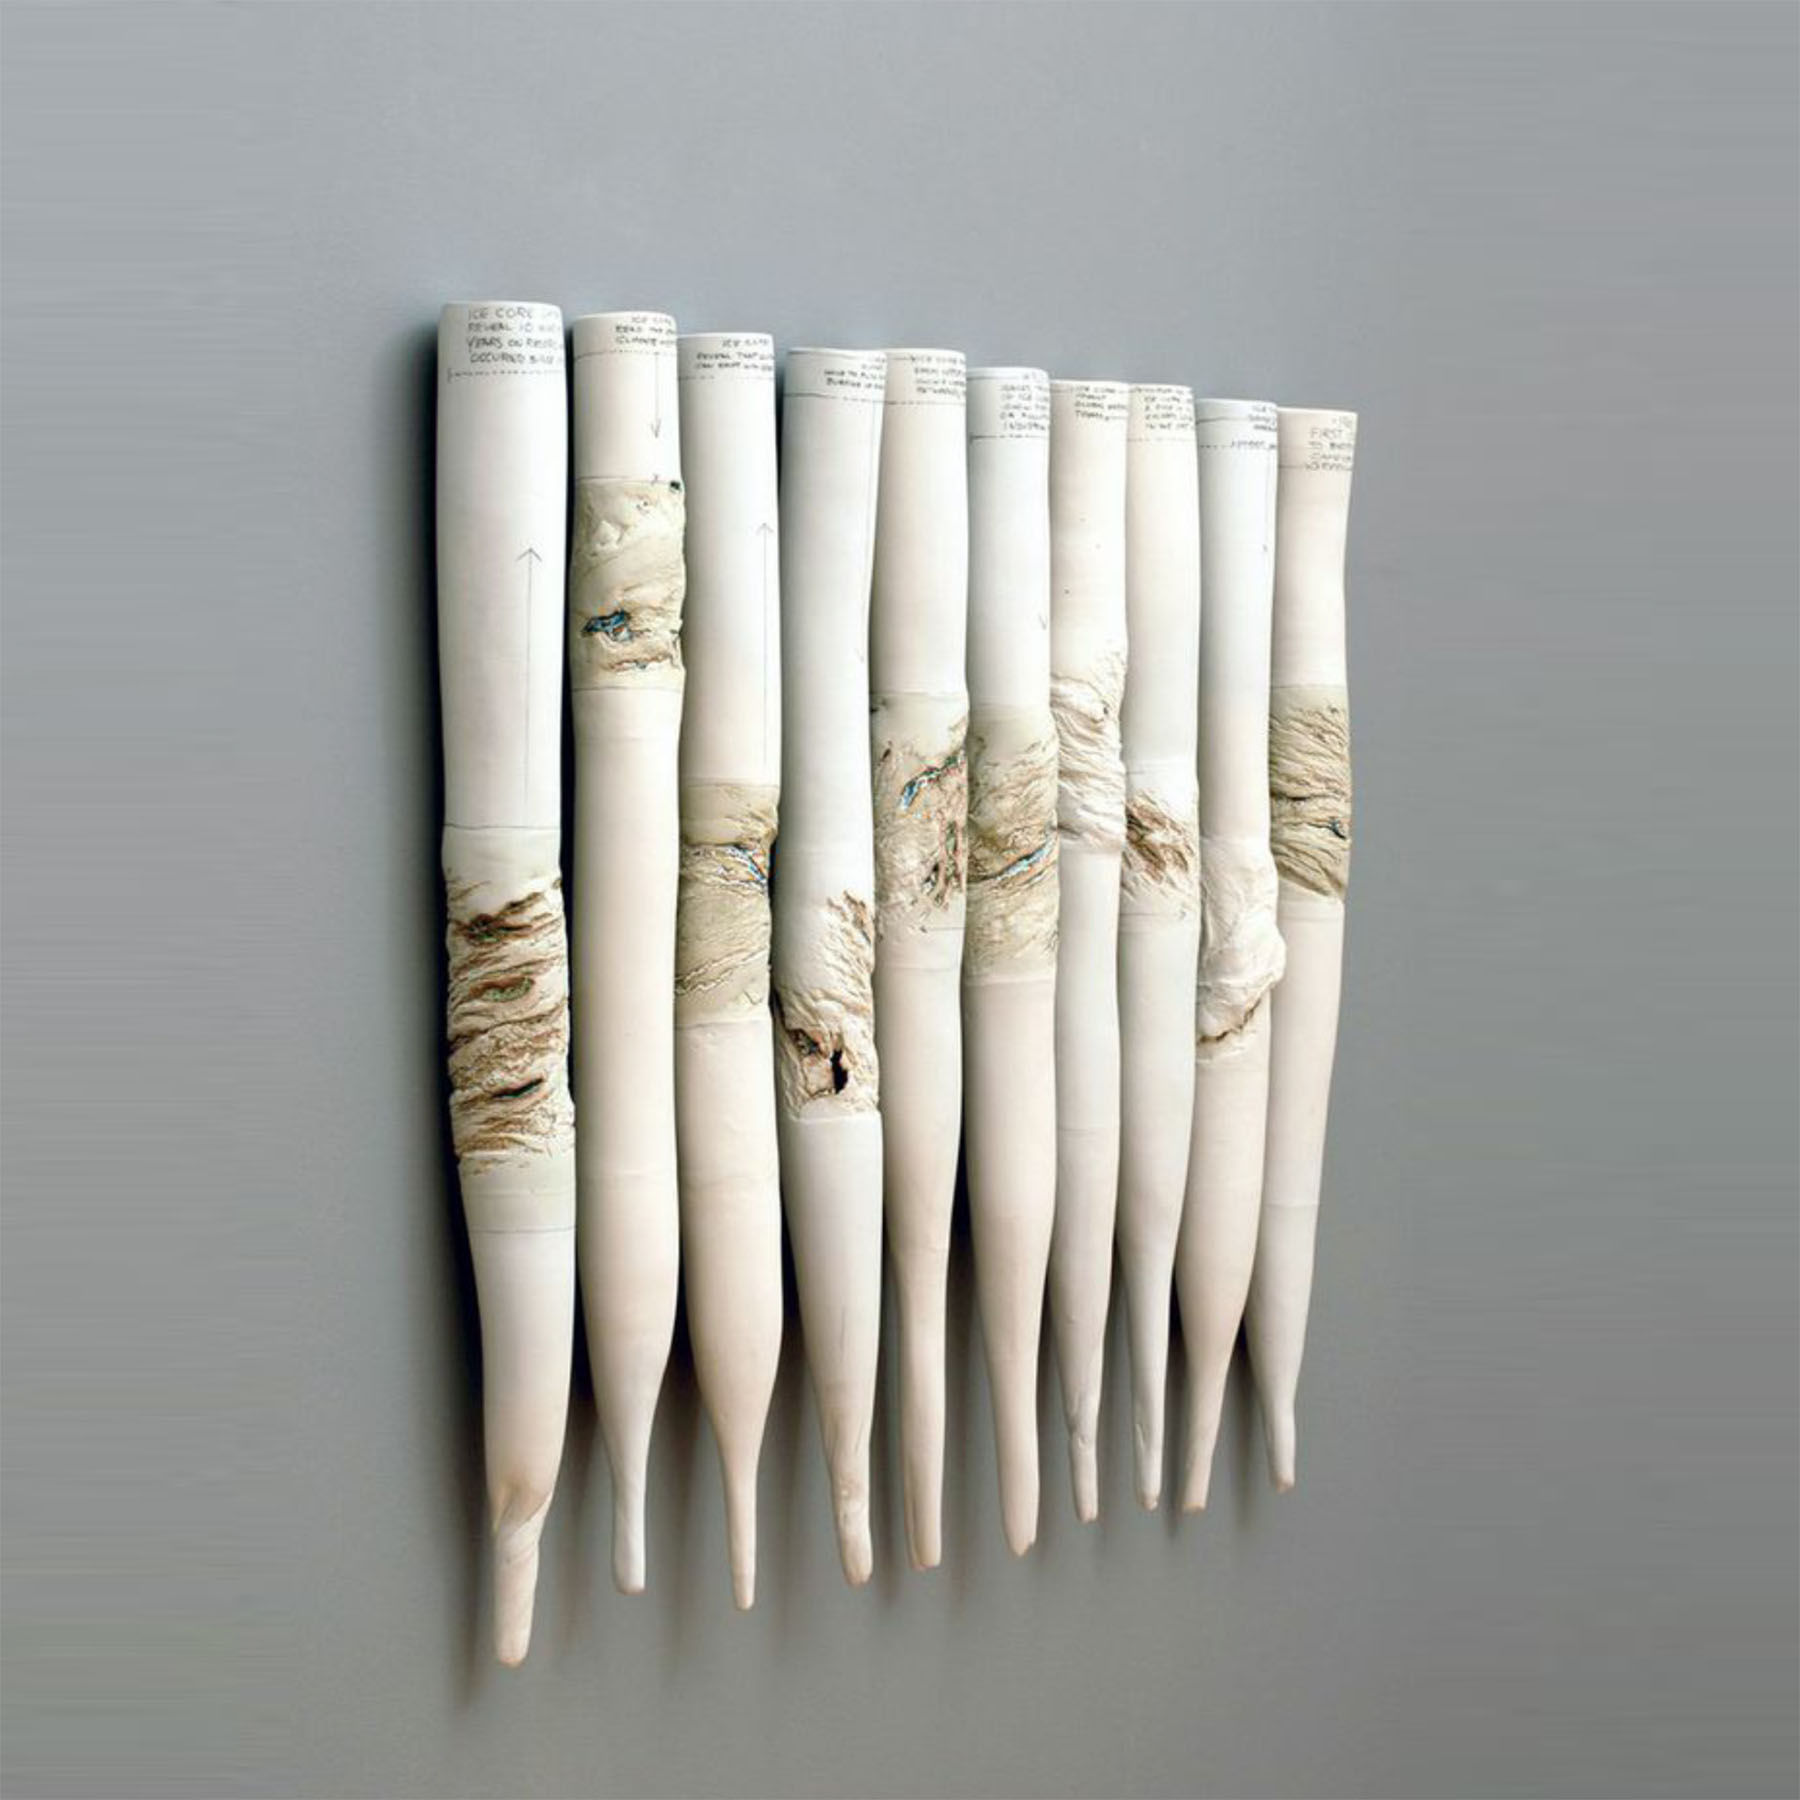 Paula Winokur, Ice Cores (2010). Porcelain. Dimensions: 34” x 5” (each core), total width 42”. ©Paula Winokur 2010. Courtesy of the artist.